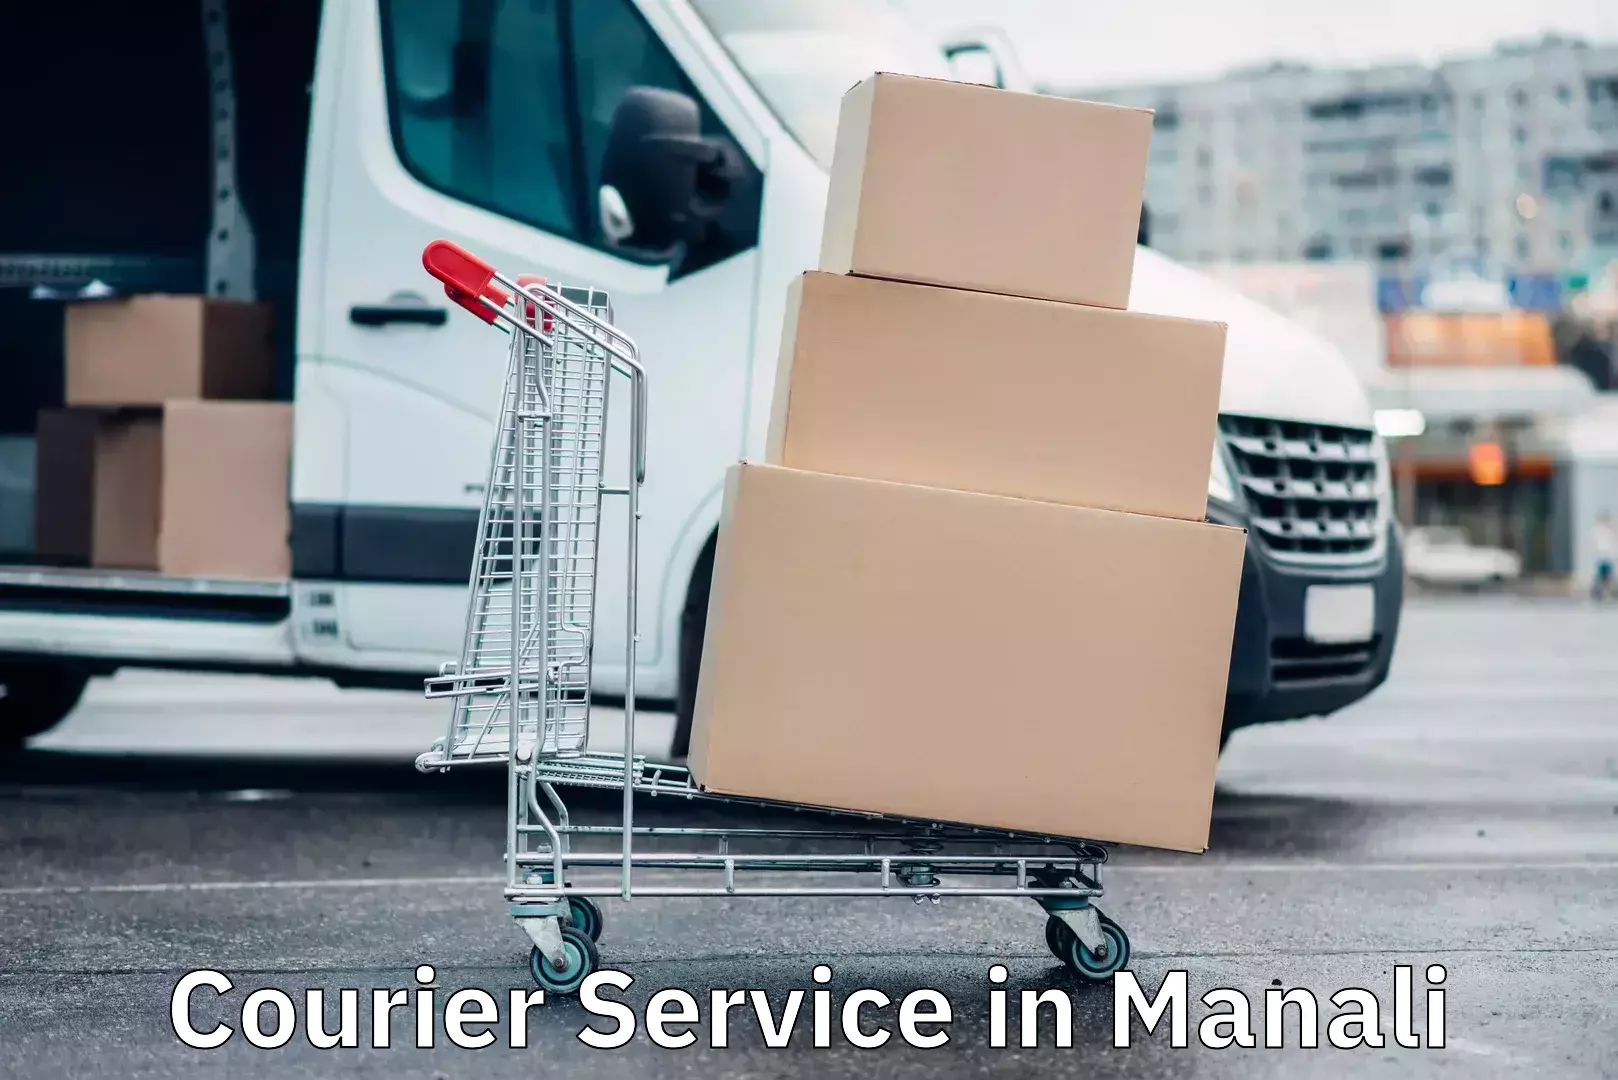 Express logistics providers in Manali